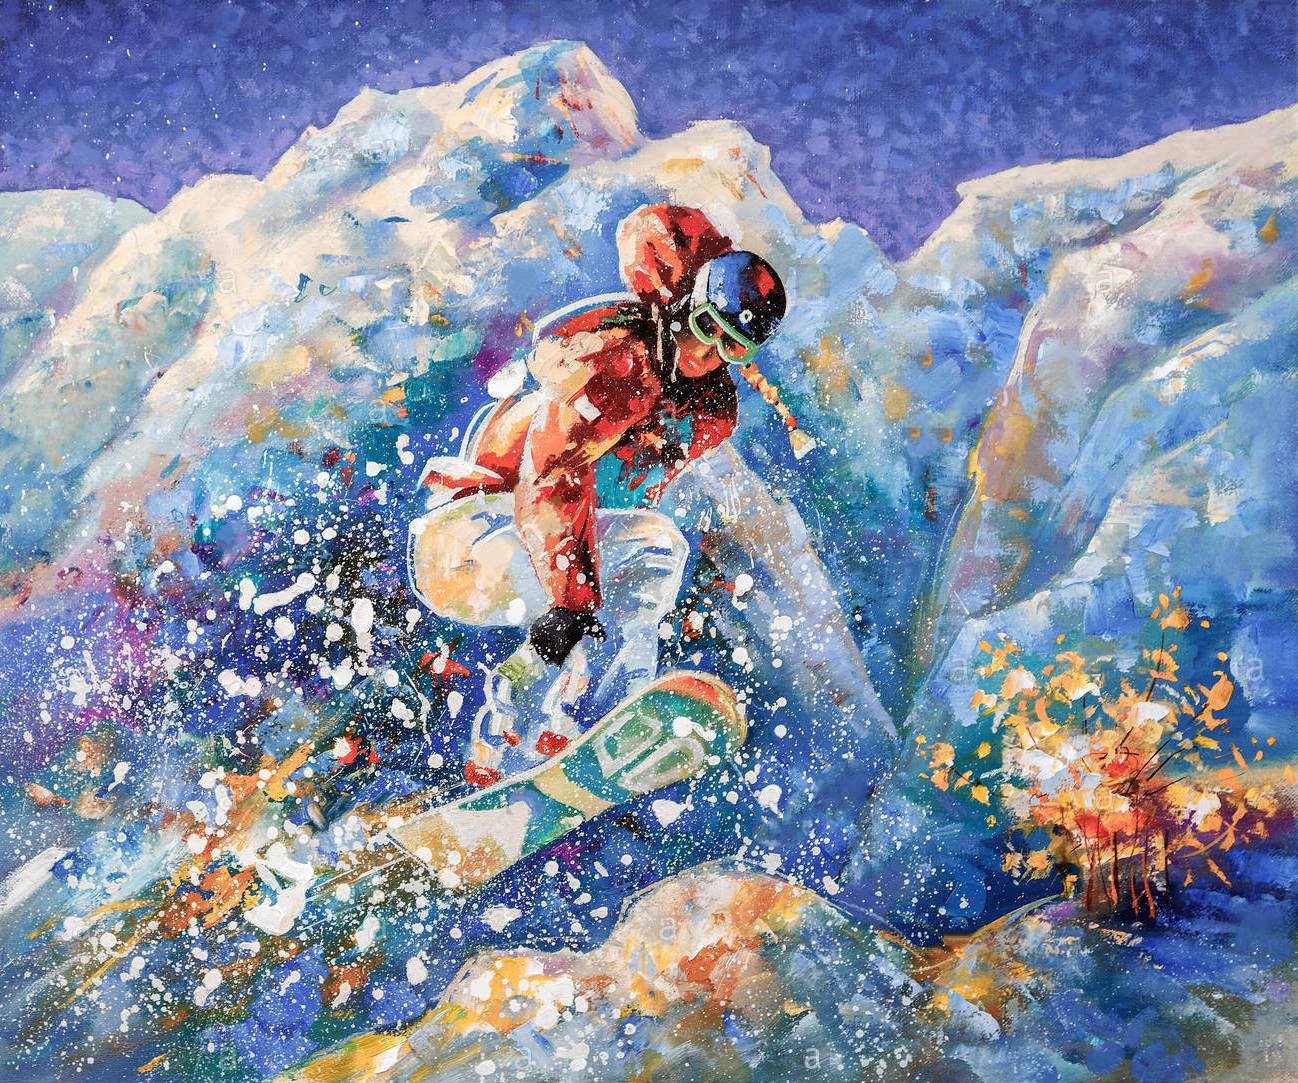 artwork girl snowboarder conquers mountain peaks author nikolay sivenkov PD1PKM